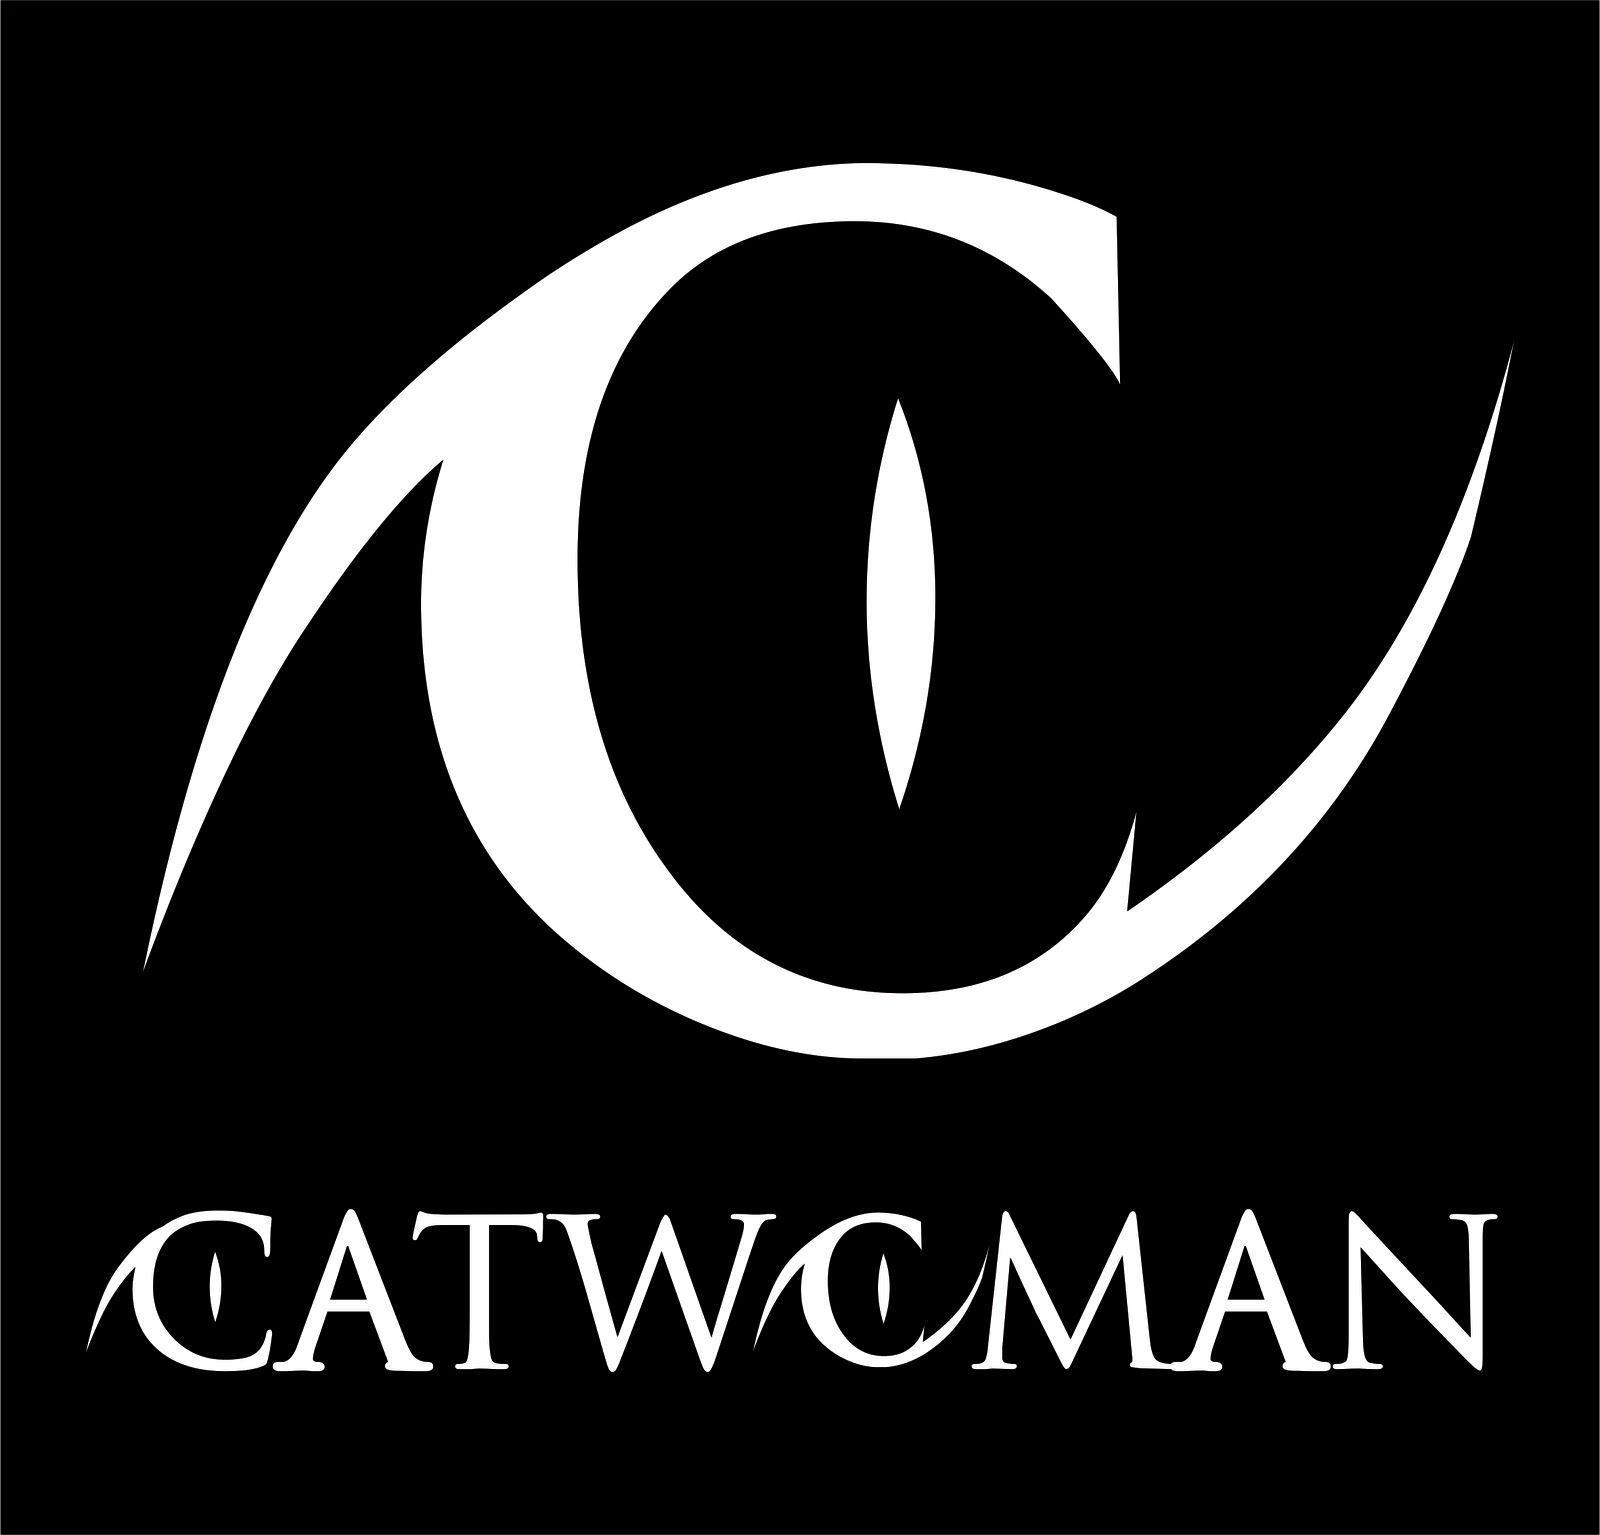 Catwoman Logo - Catwoman logo. Ideas. Catwoman, Catwoman cosplay, Batman, catwoman